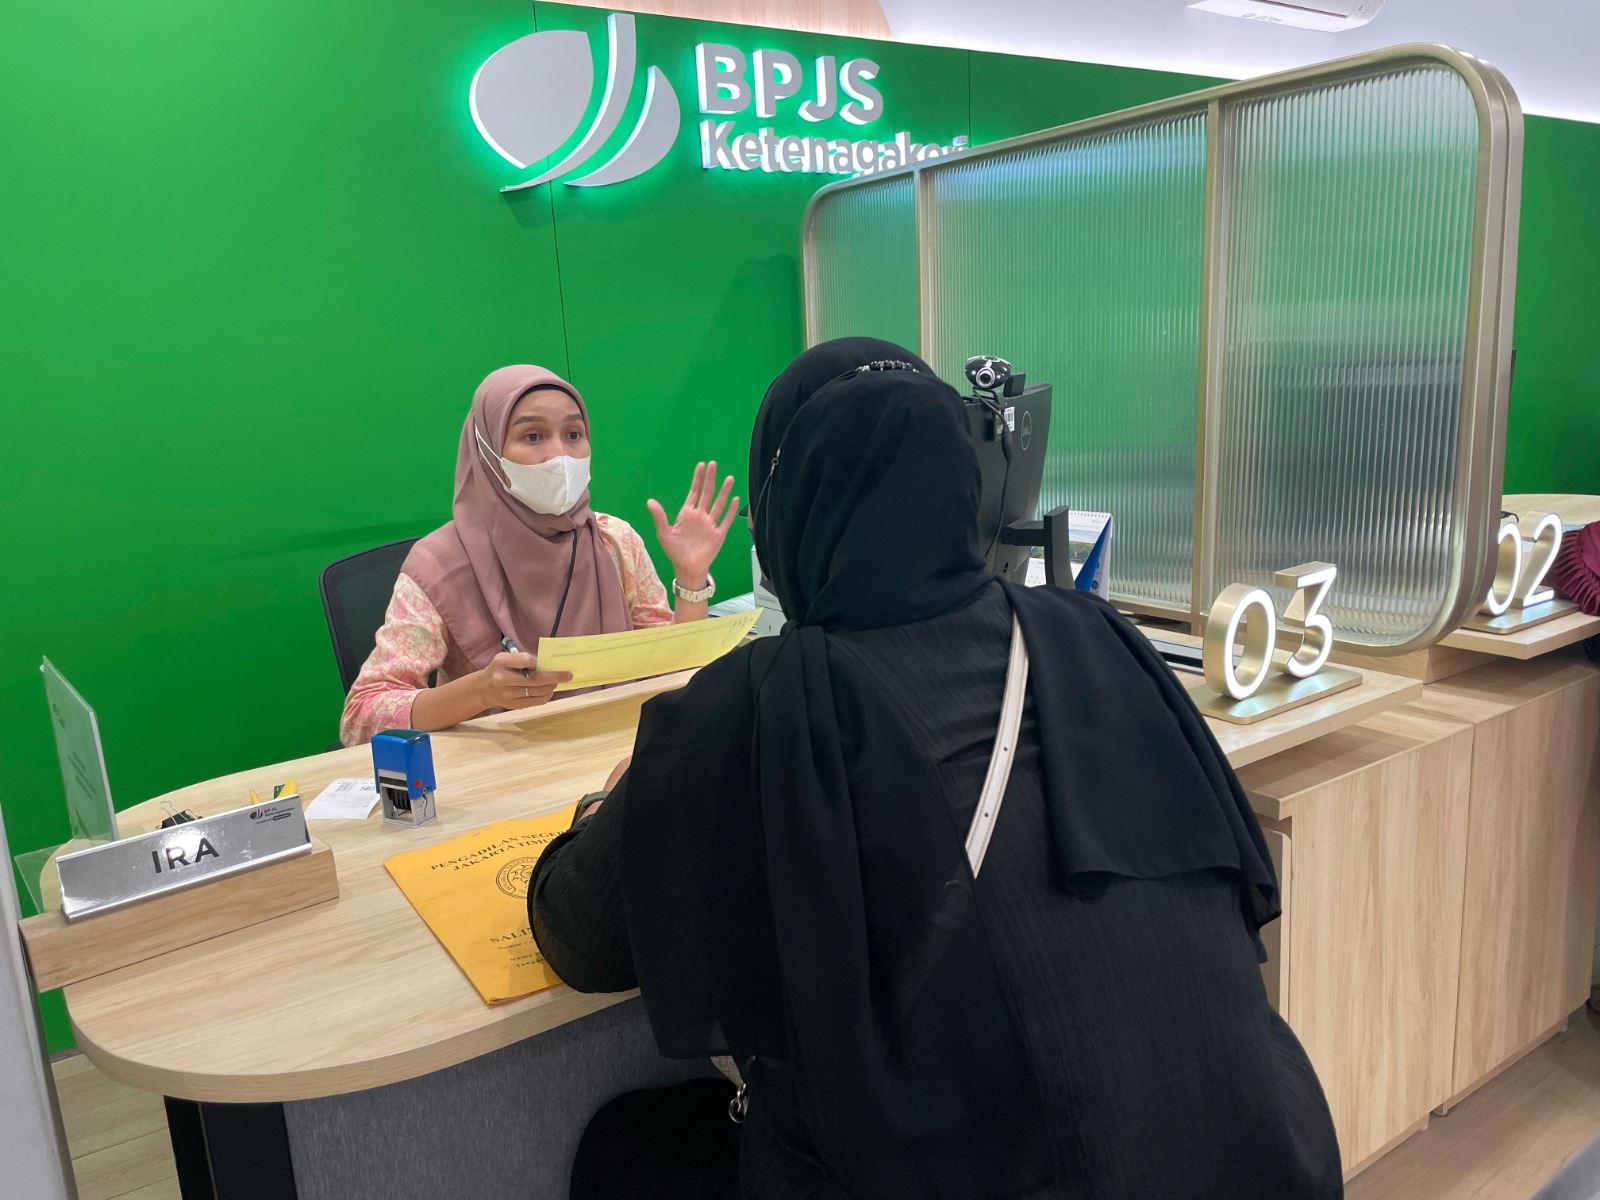 BPJS Ketenagakerjaan Rawamangun Bayarkan Klaim Tembus Rp504,4 Miliar